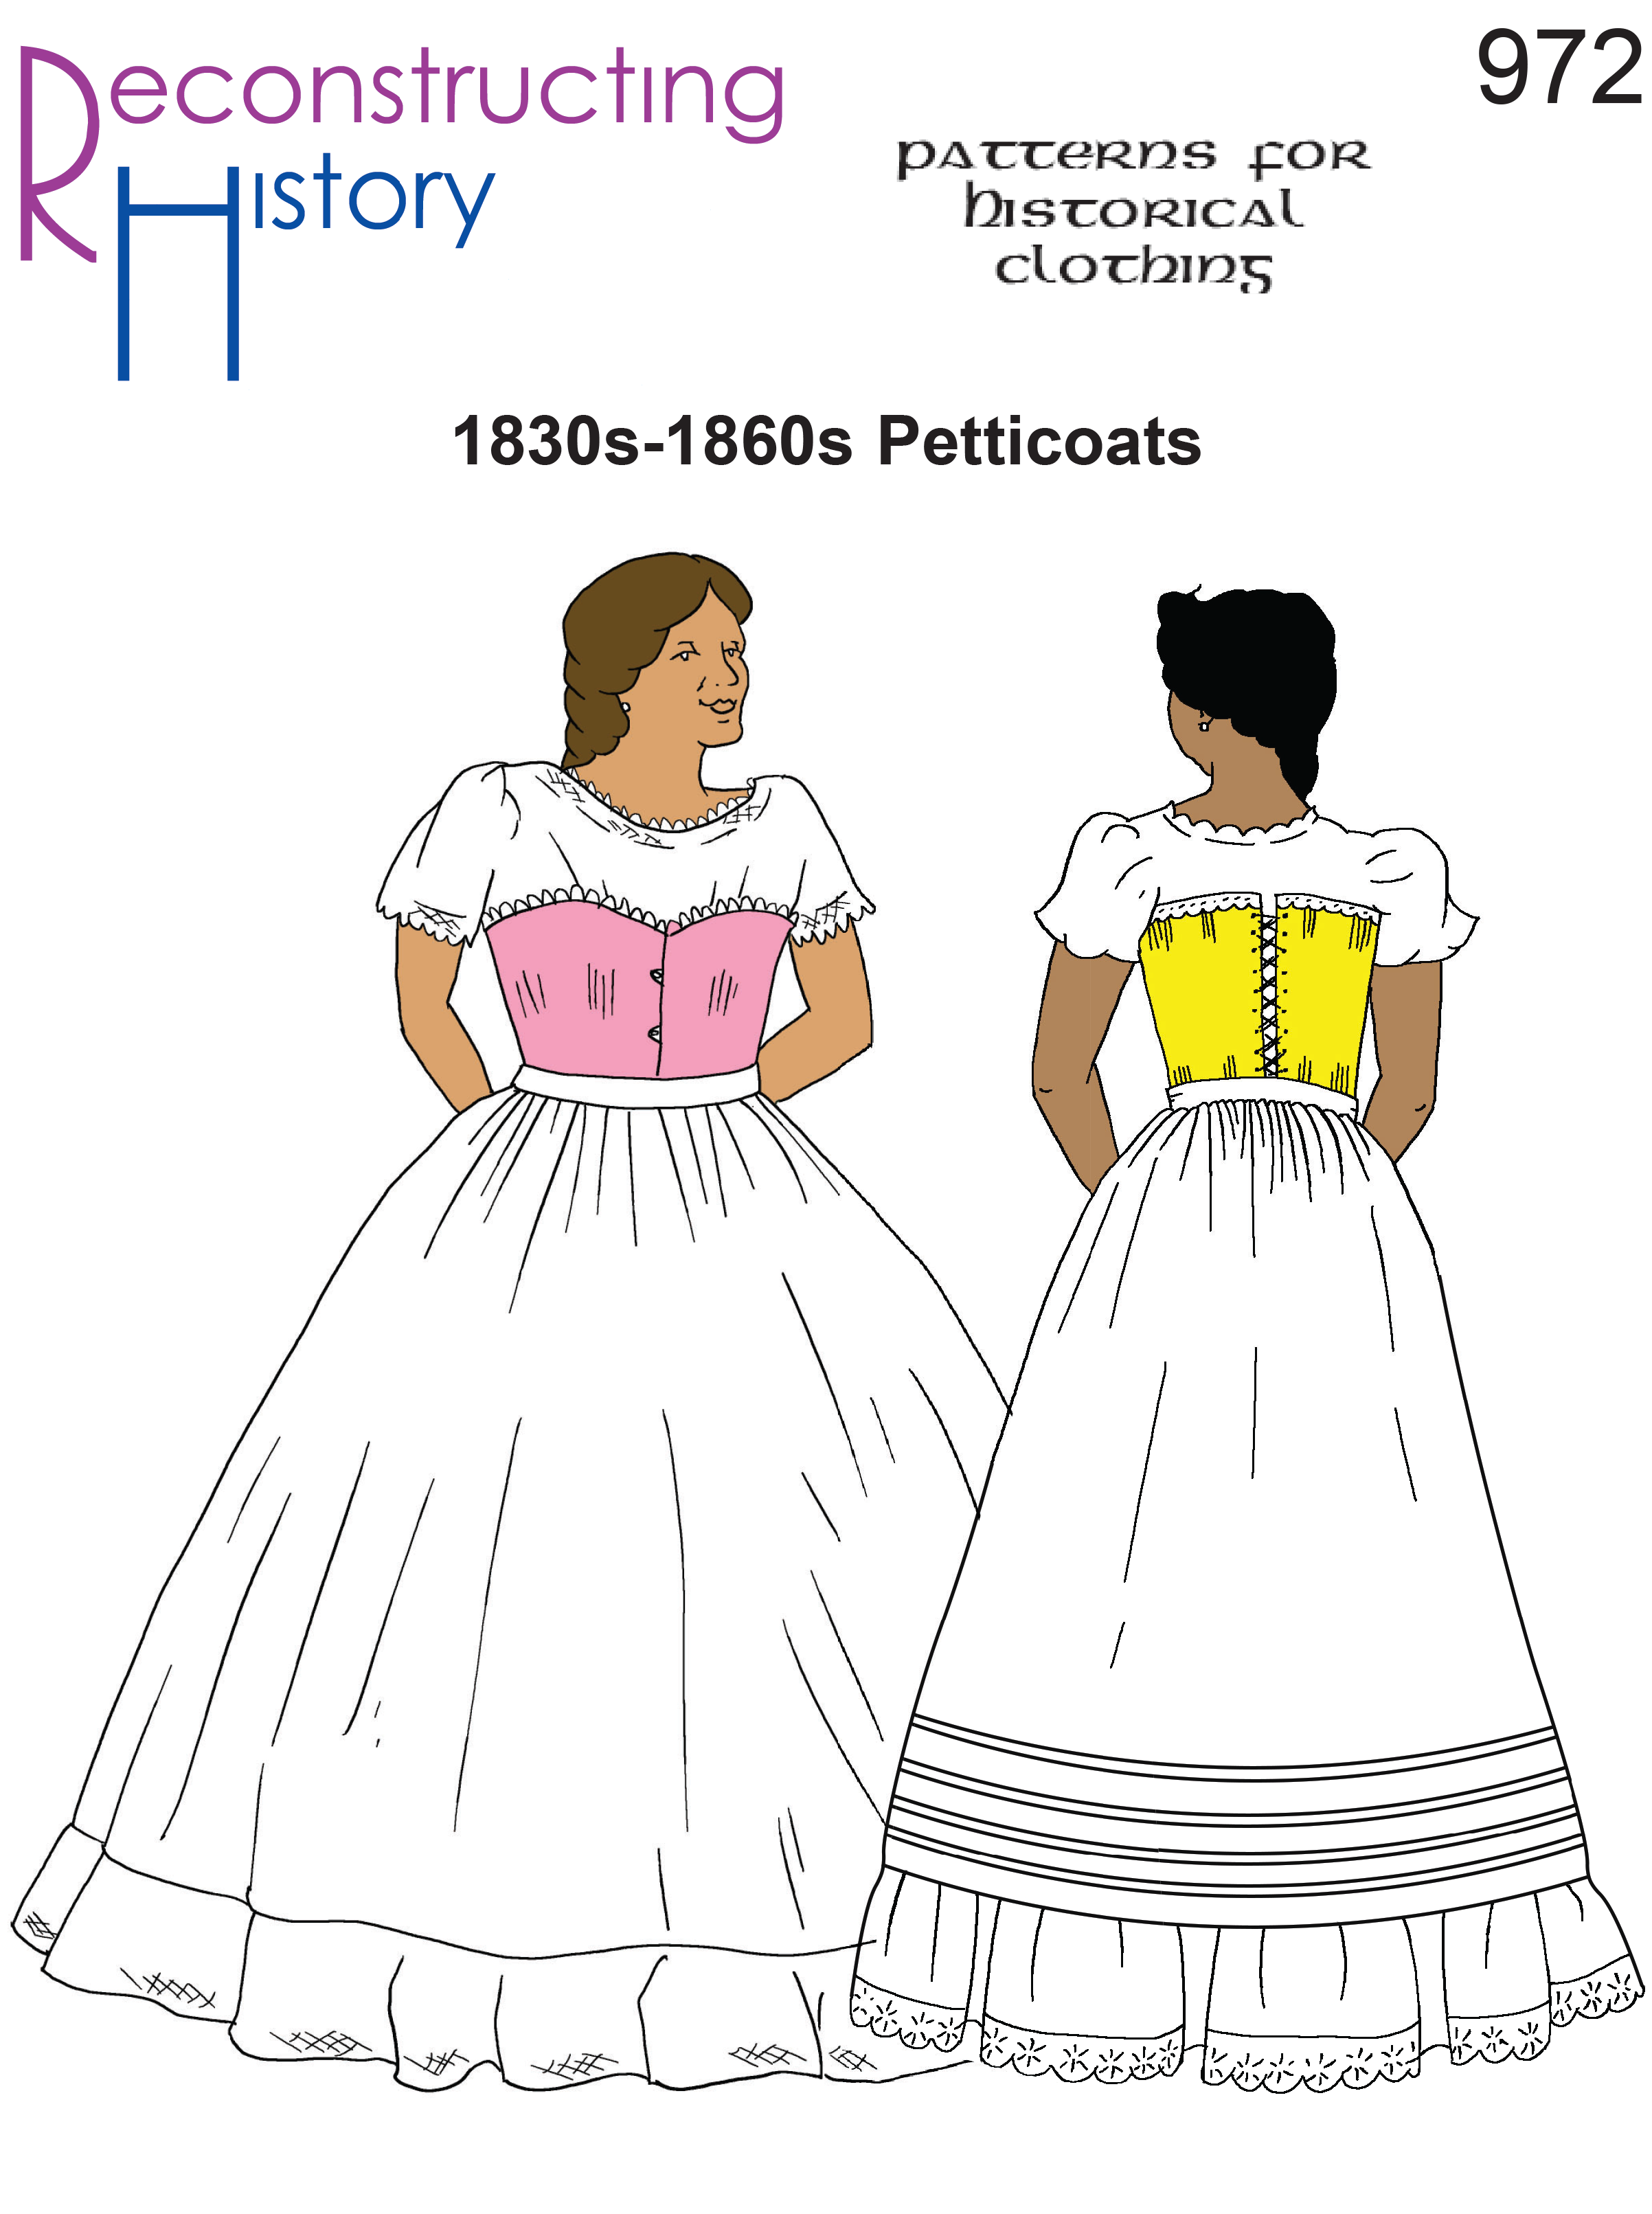 A New Era! 1790s Stays and Petticoat